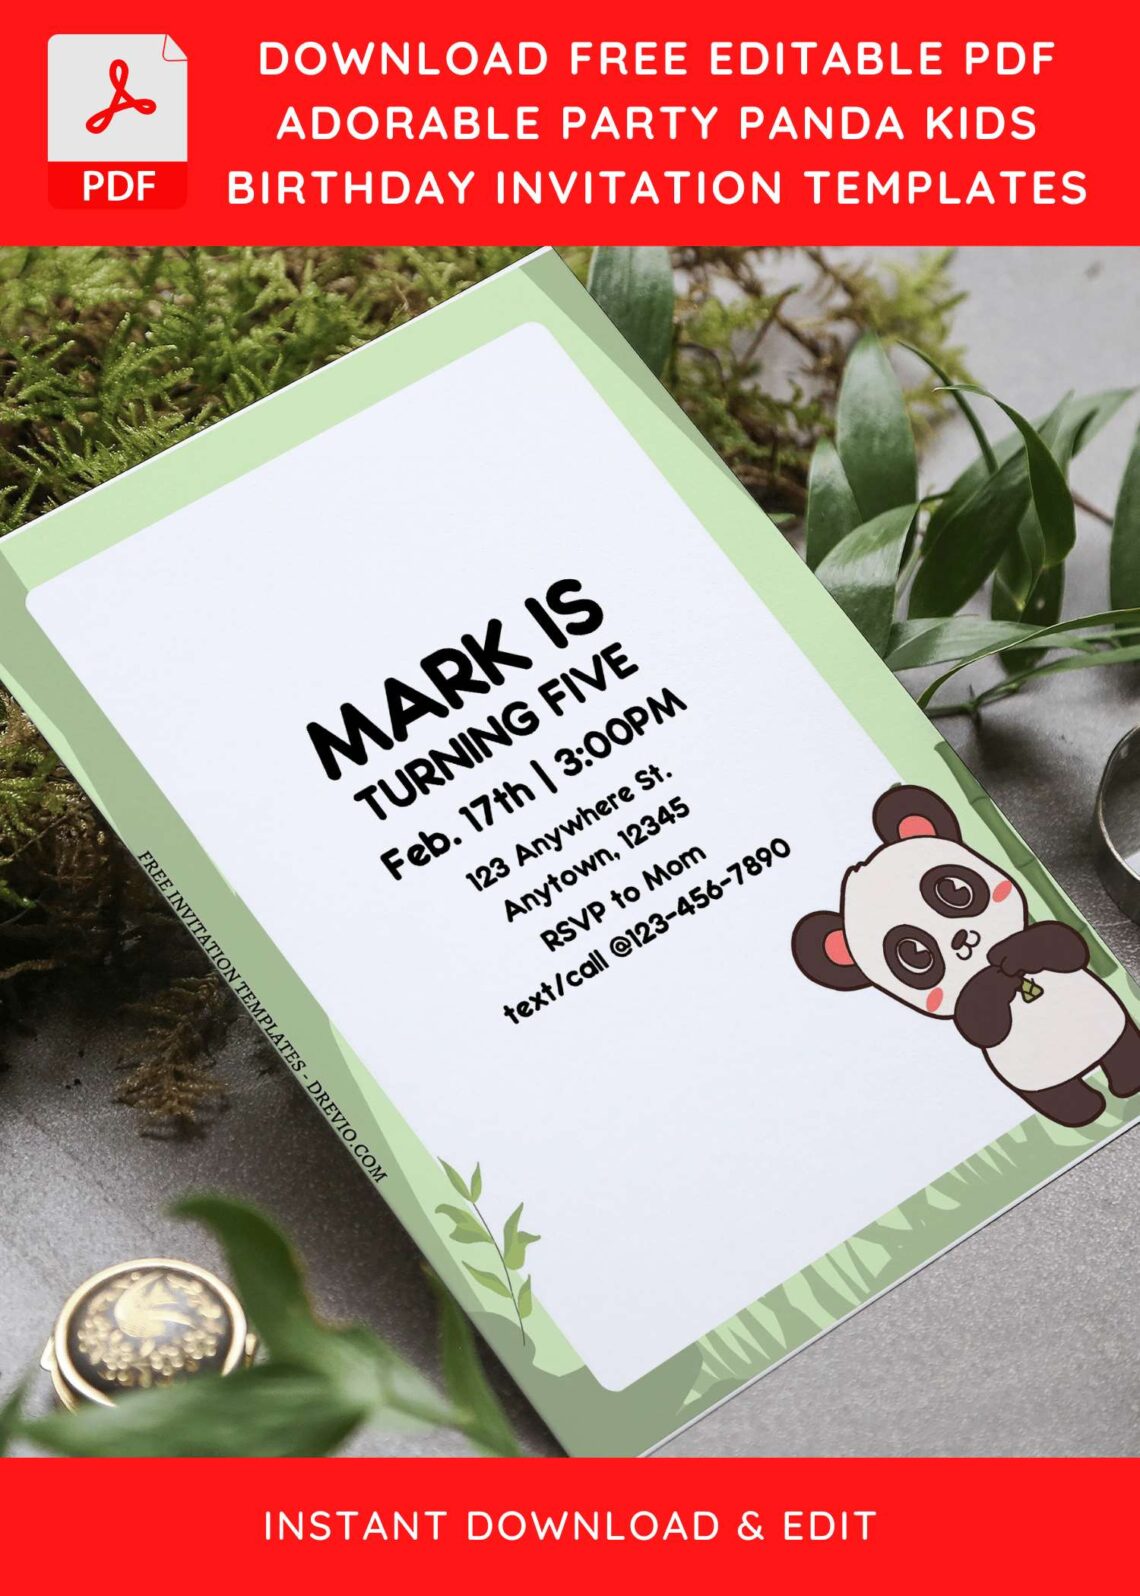 (Free Editable PDF) Adorable Baby Panda Birthday Invitation Templates E